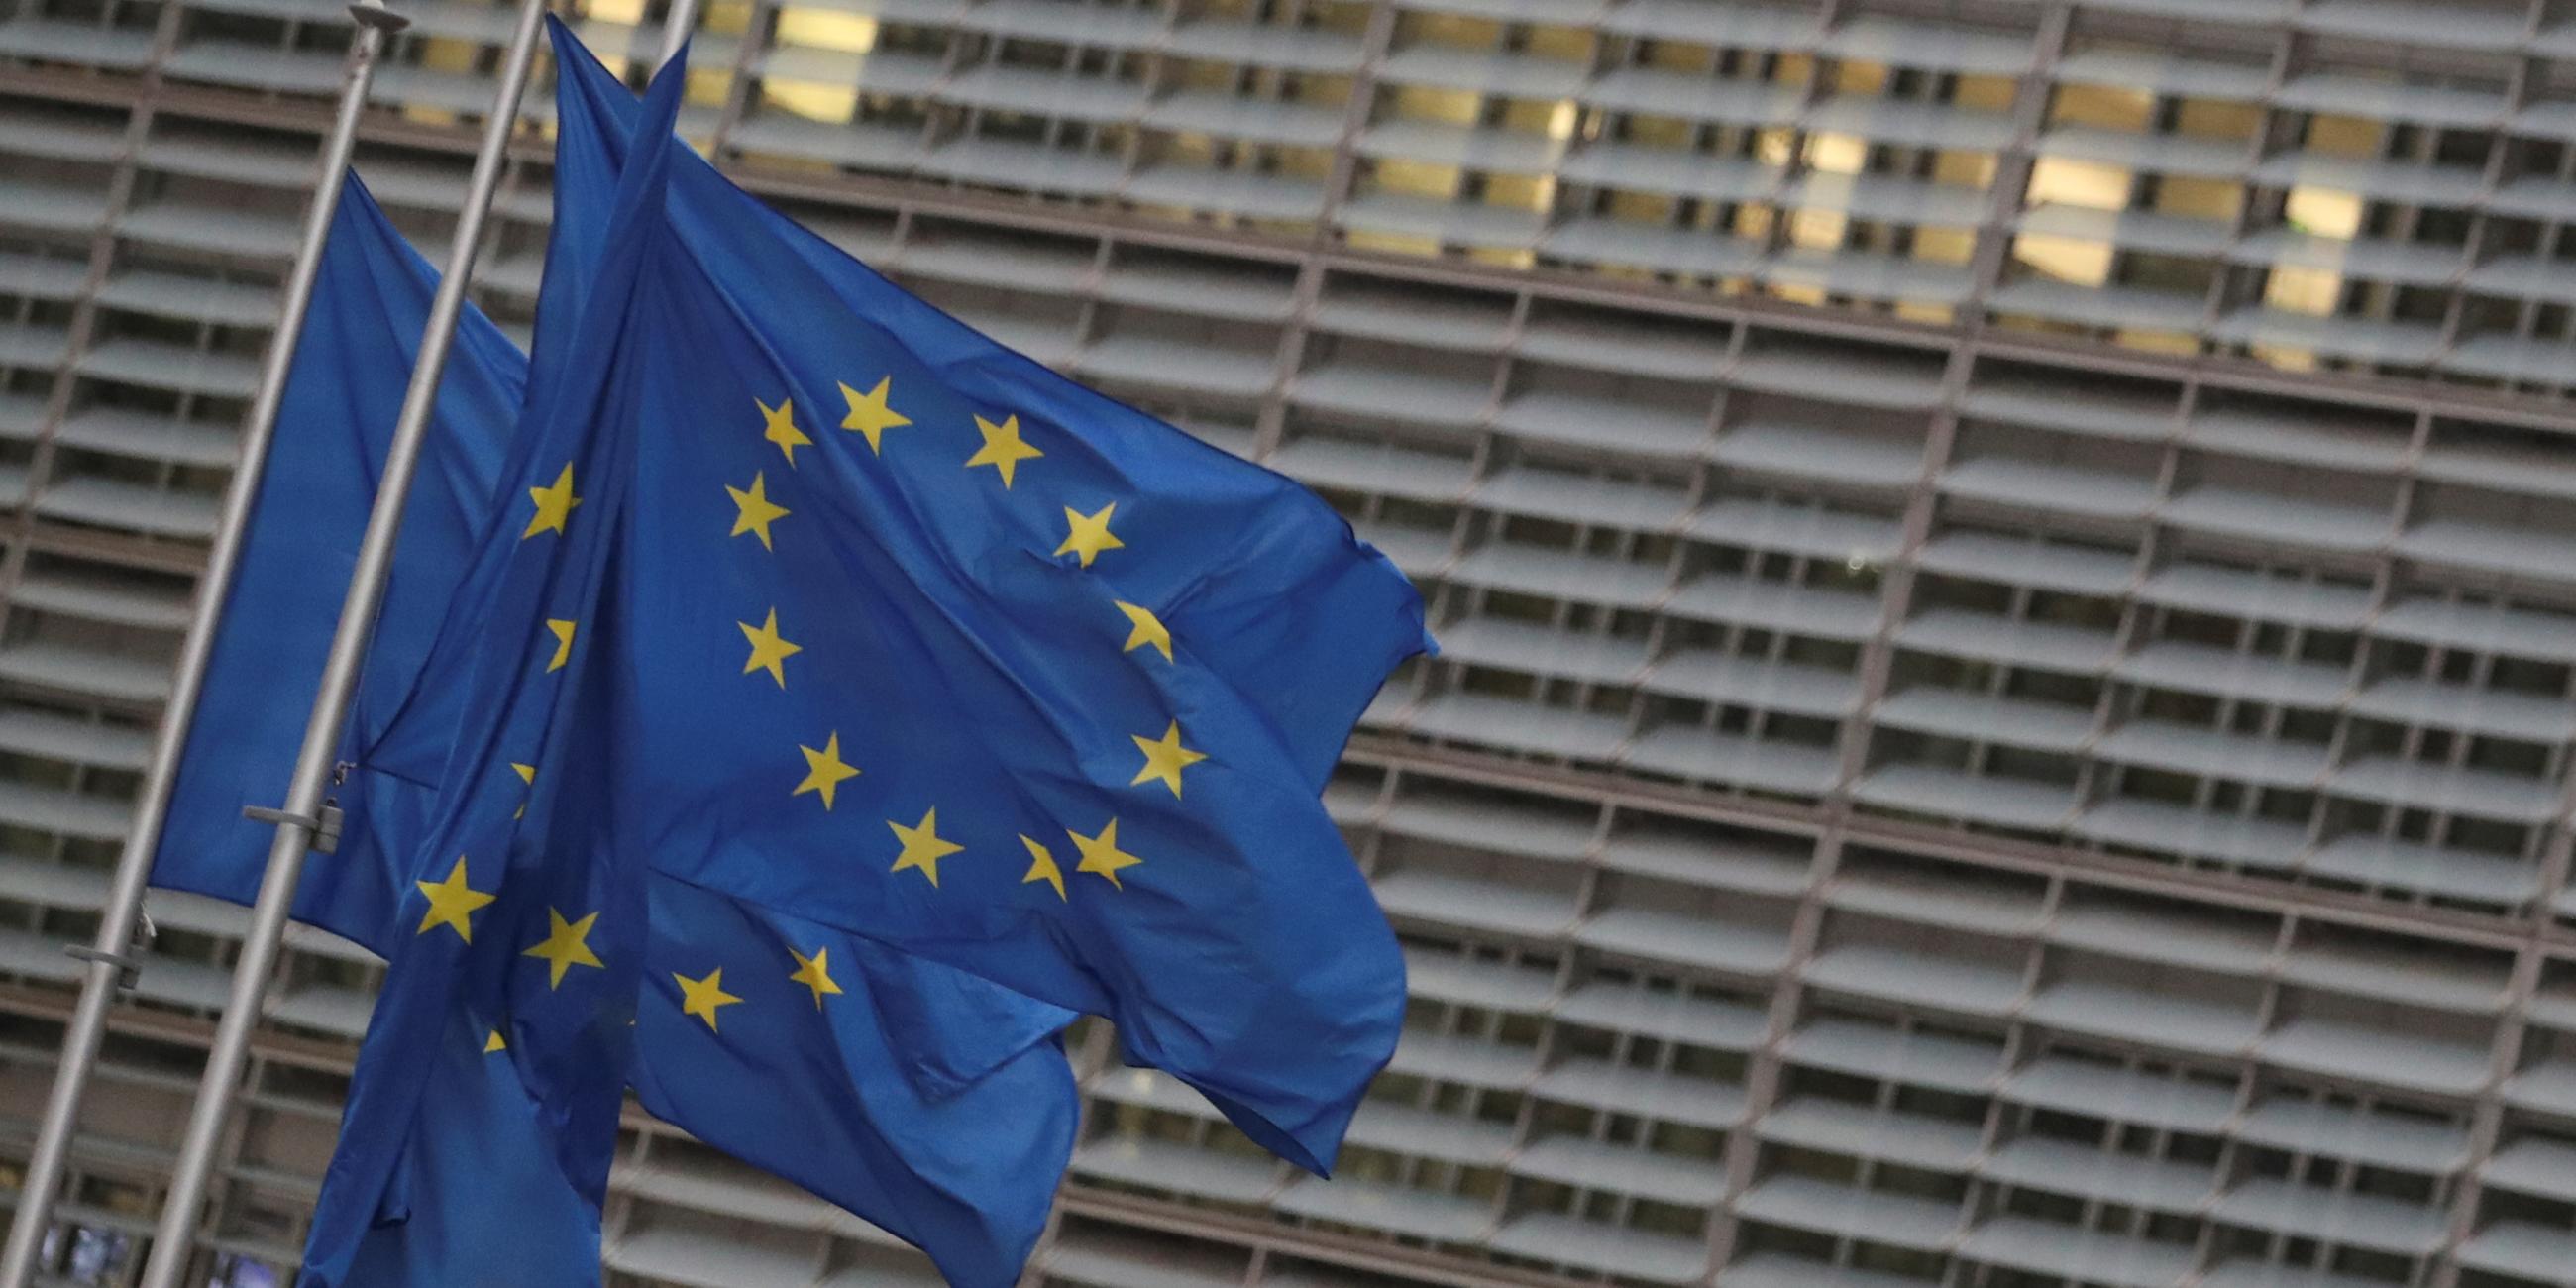 Die EU-Fahne weht vor dem EU-Parlament im Wind.